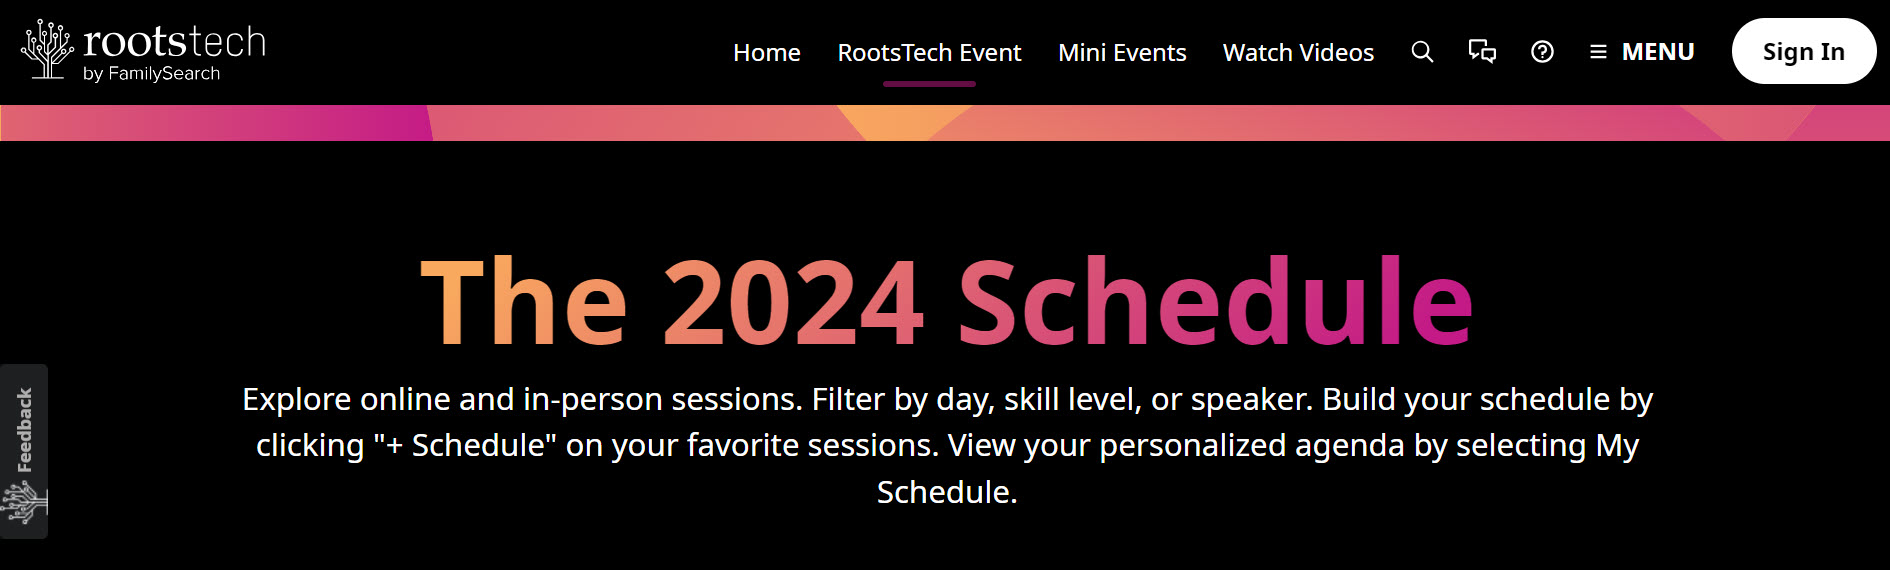 RootsTech 2024 Class Schedule Splash 01 